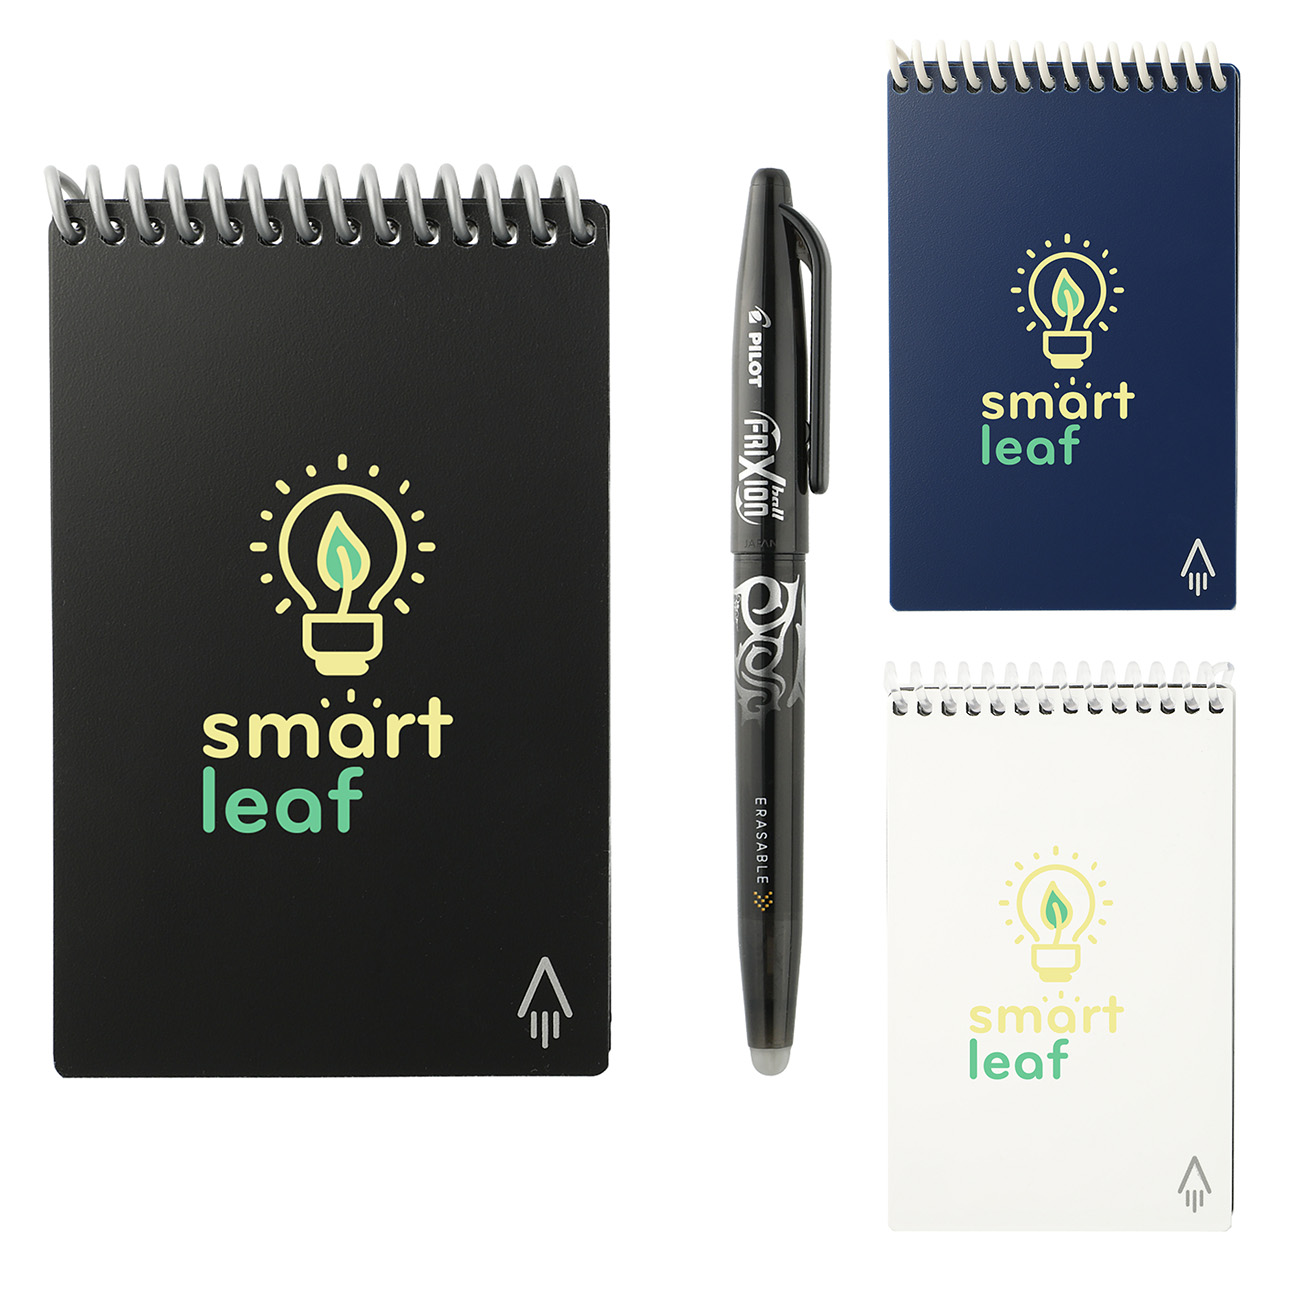 Rocketbook Mini, Smart Pocket Notebook